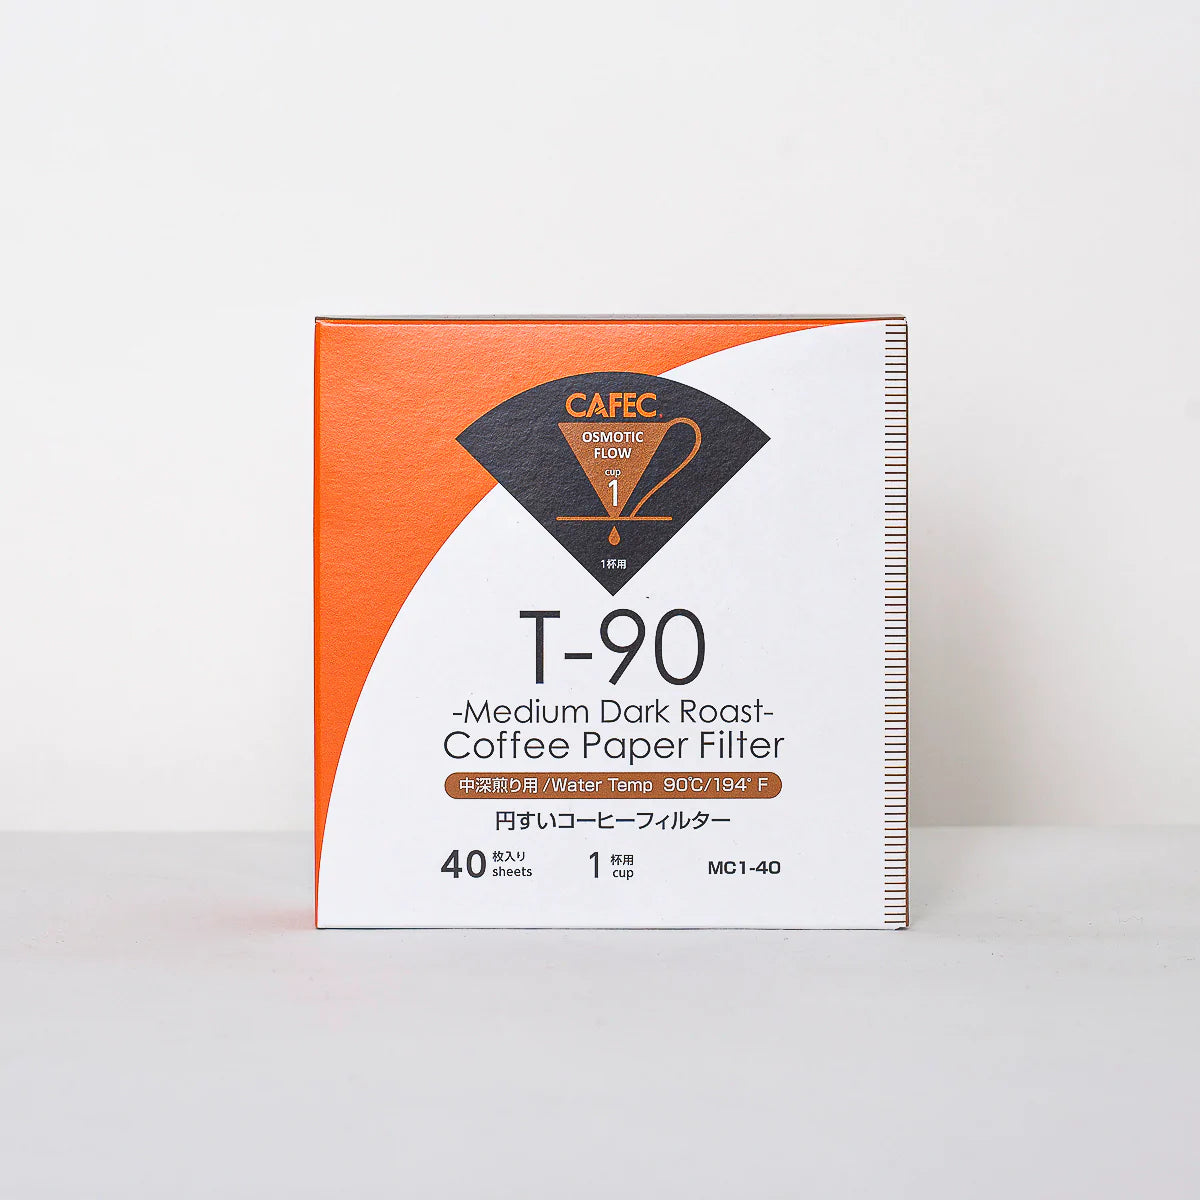 CAFEC - T-90 Medium Roast Coffee Paper Filter (box of 40)